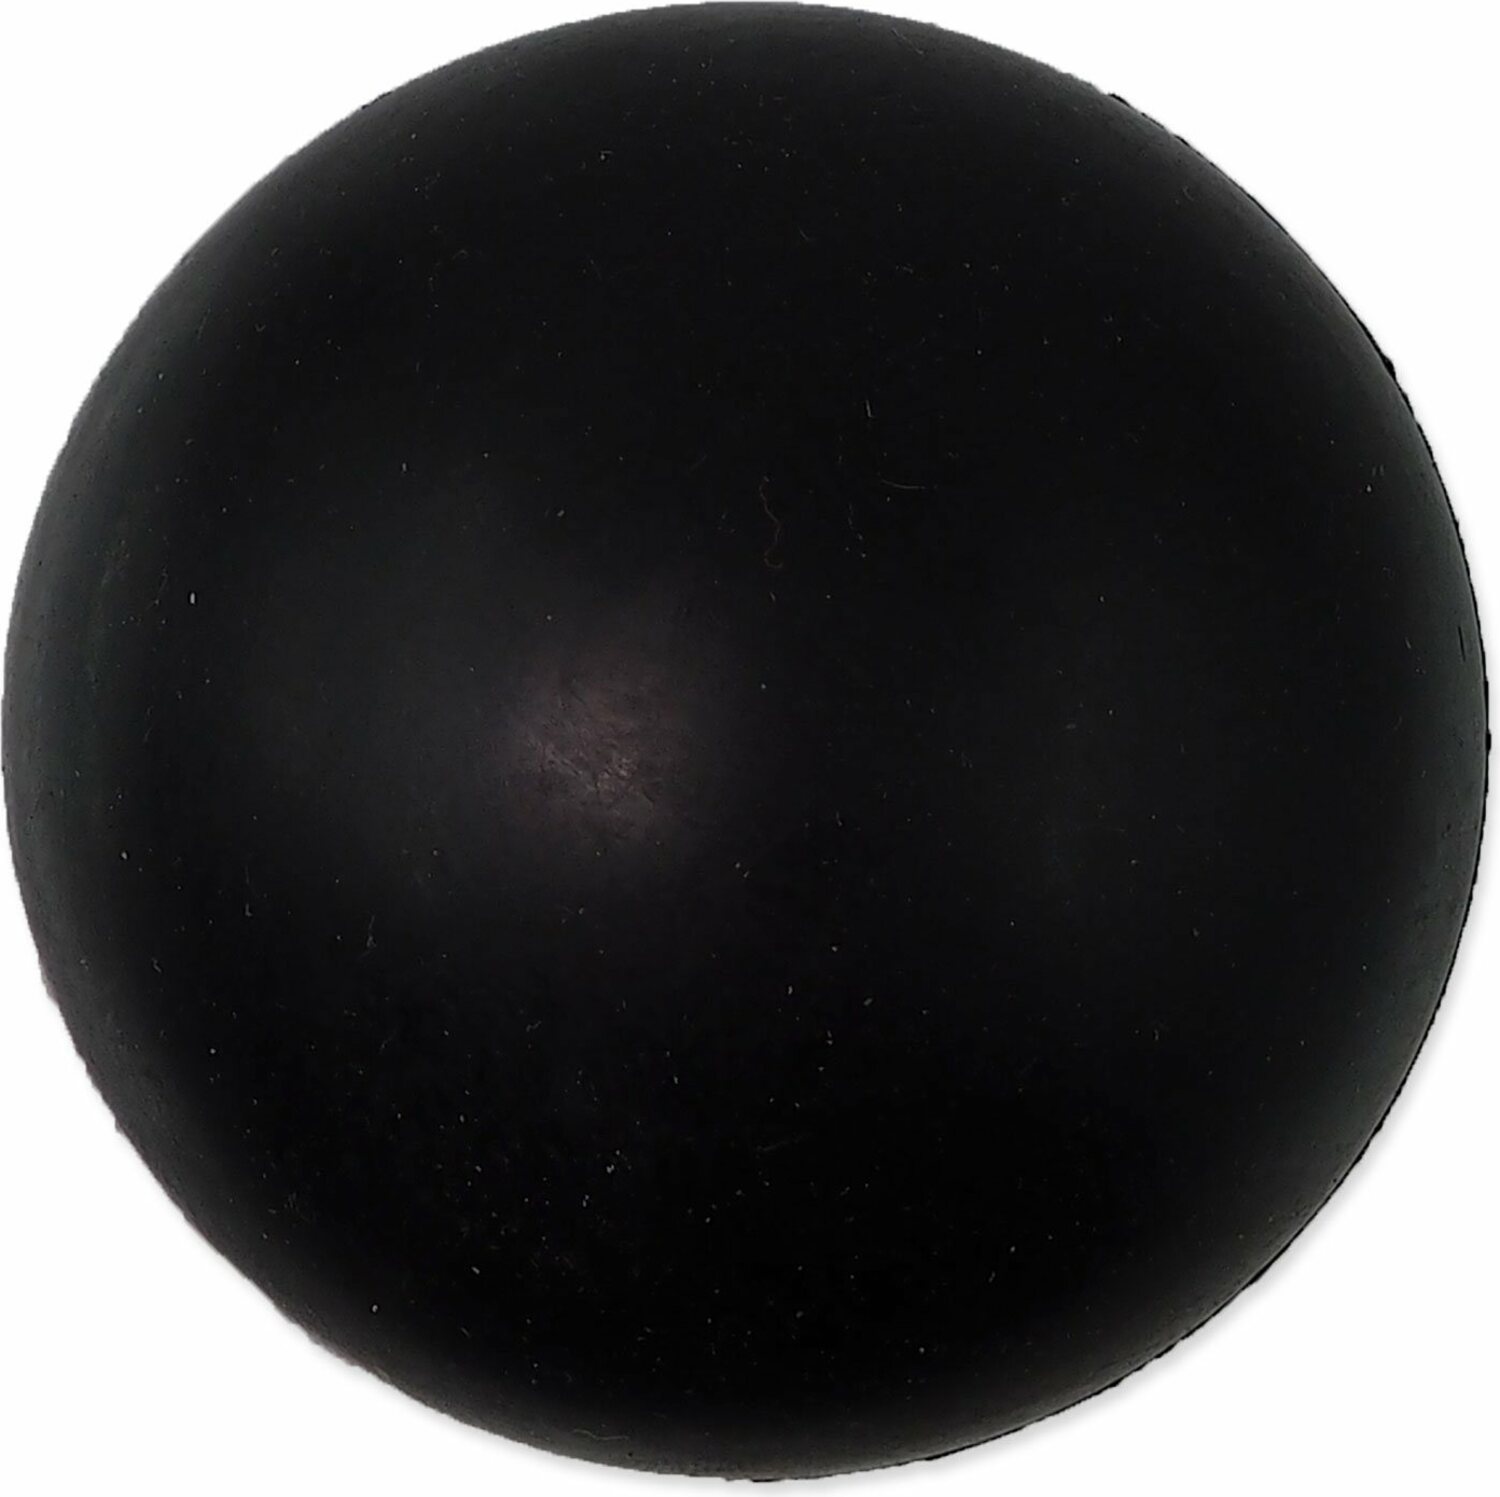 Hračka Dog Fantasy míč tvrdá černá 7cm